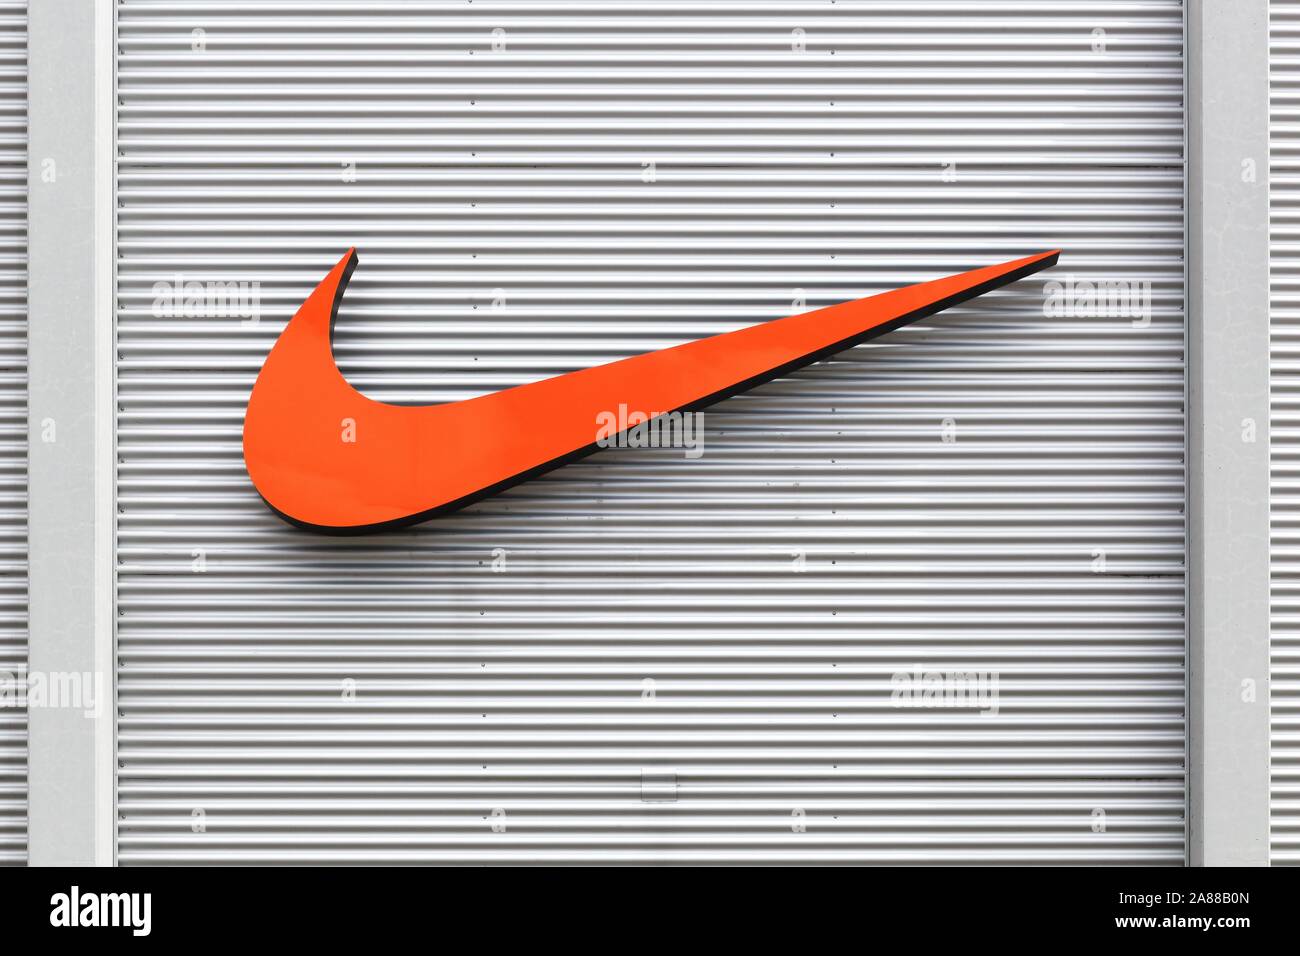 Nike Store Germany Stockfotos und -bilder Kaufen - Alamy